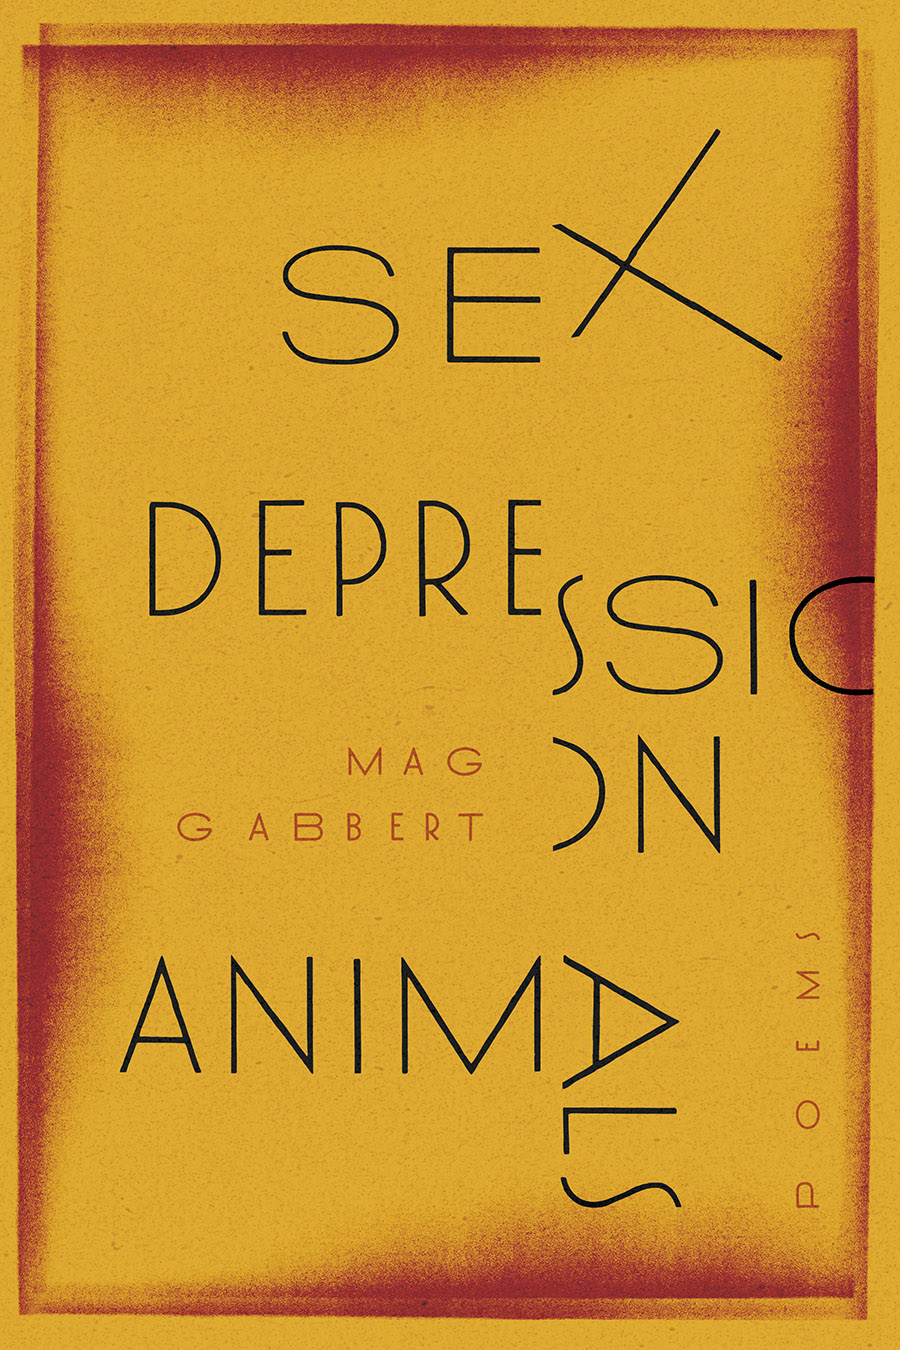 Sex Depression Animals: Poems cover